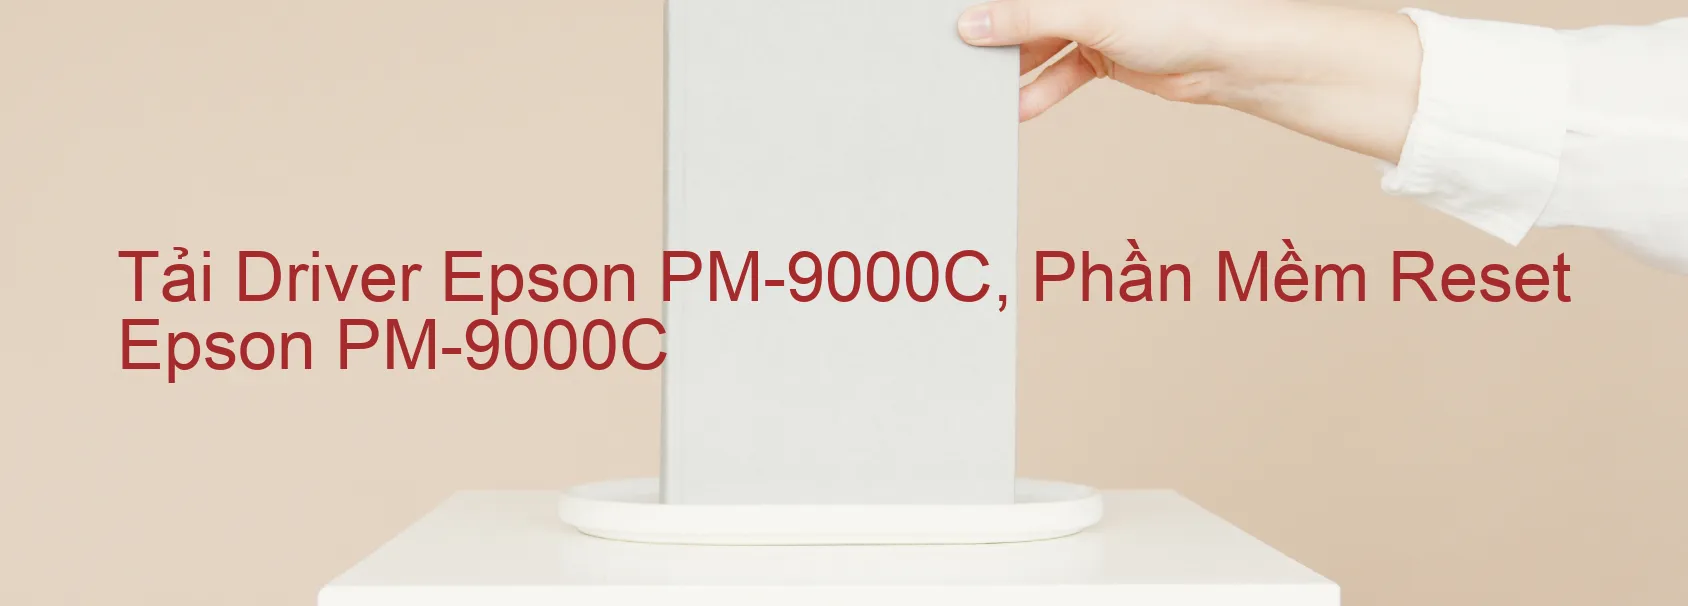 Driver Epson PM-9000C, Phần Mềm Reset Epson PM-9000C